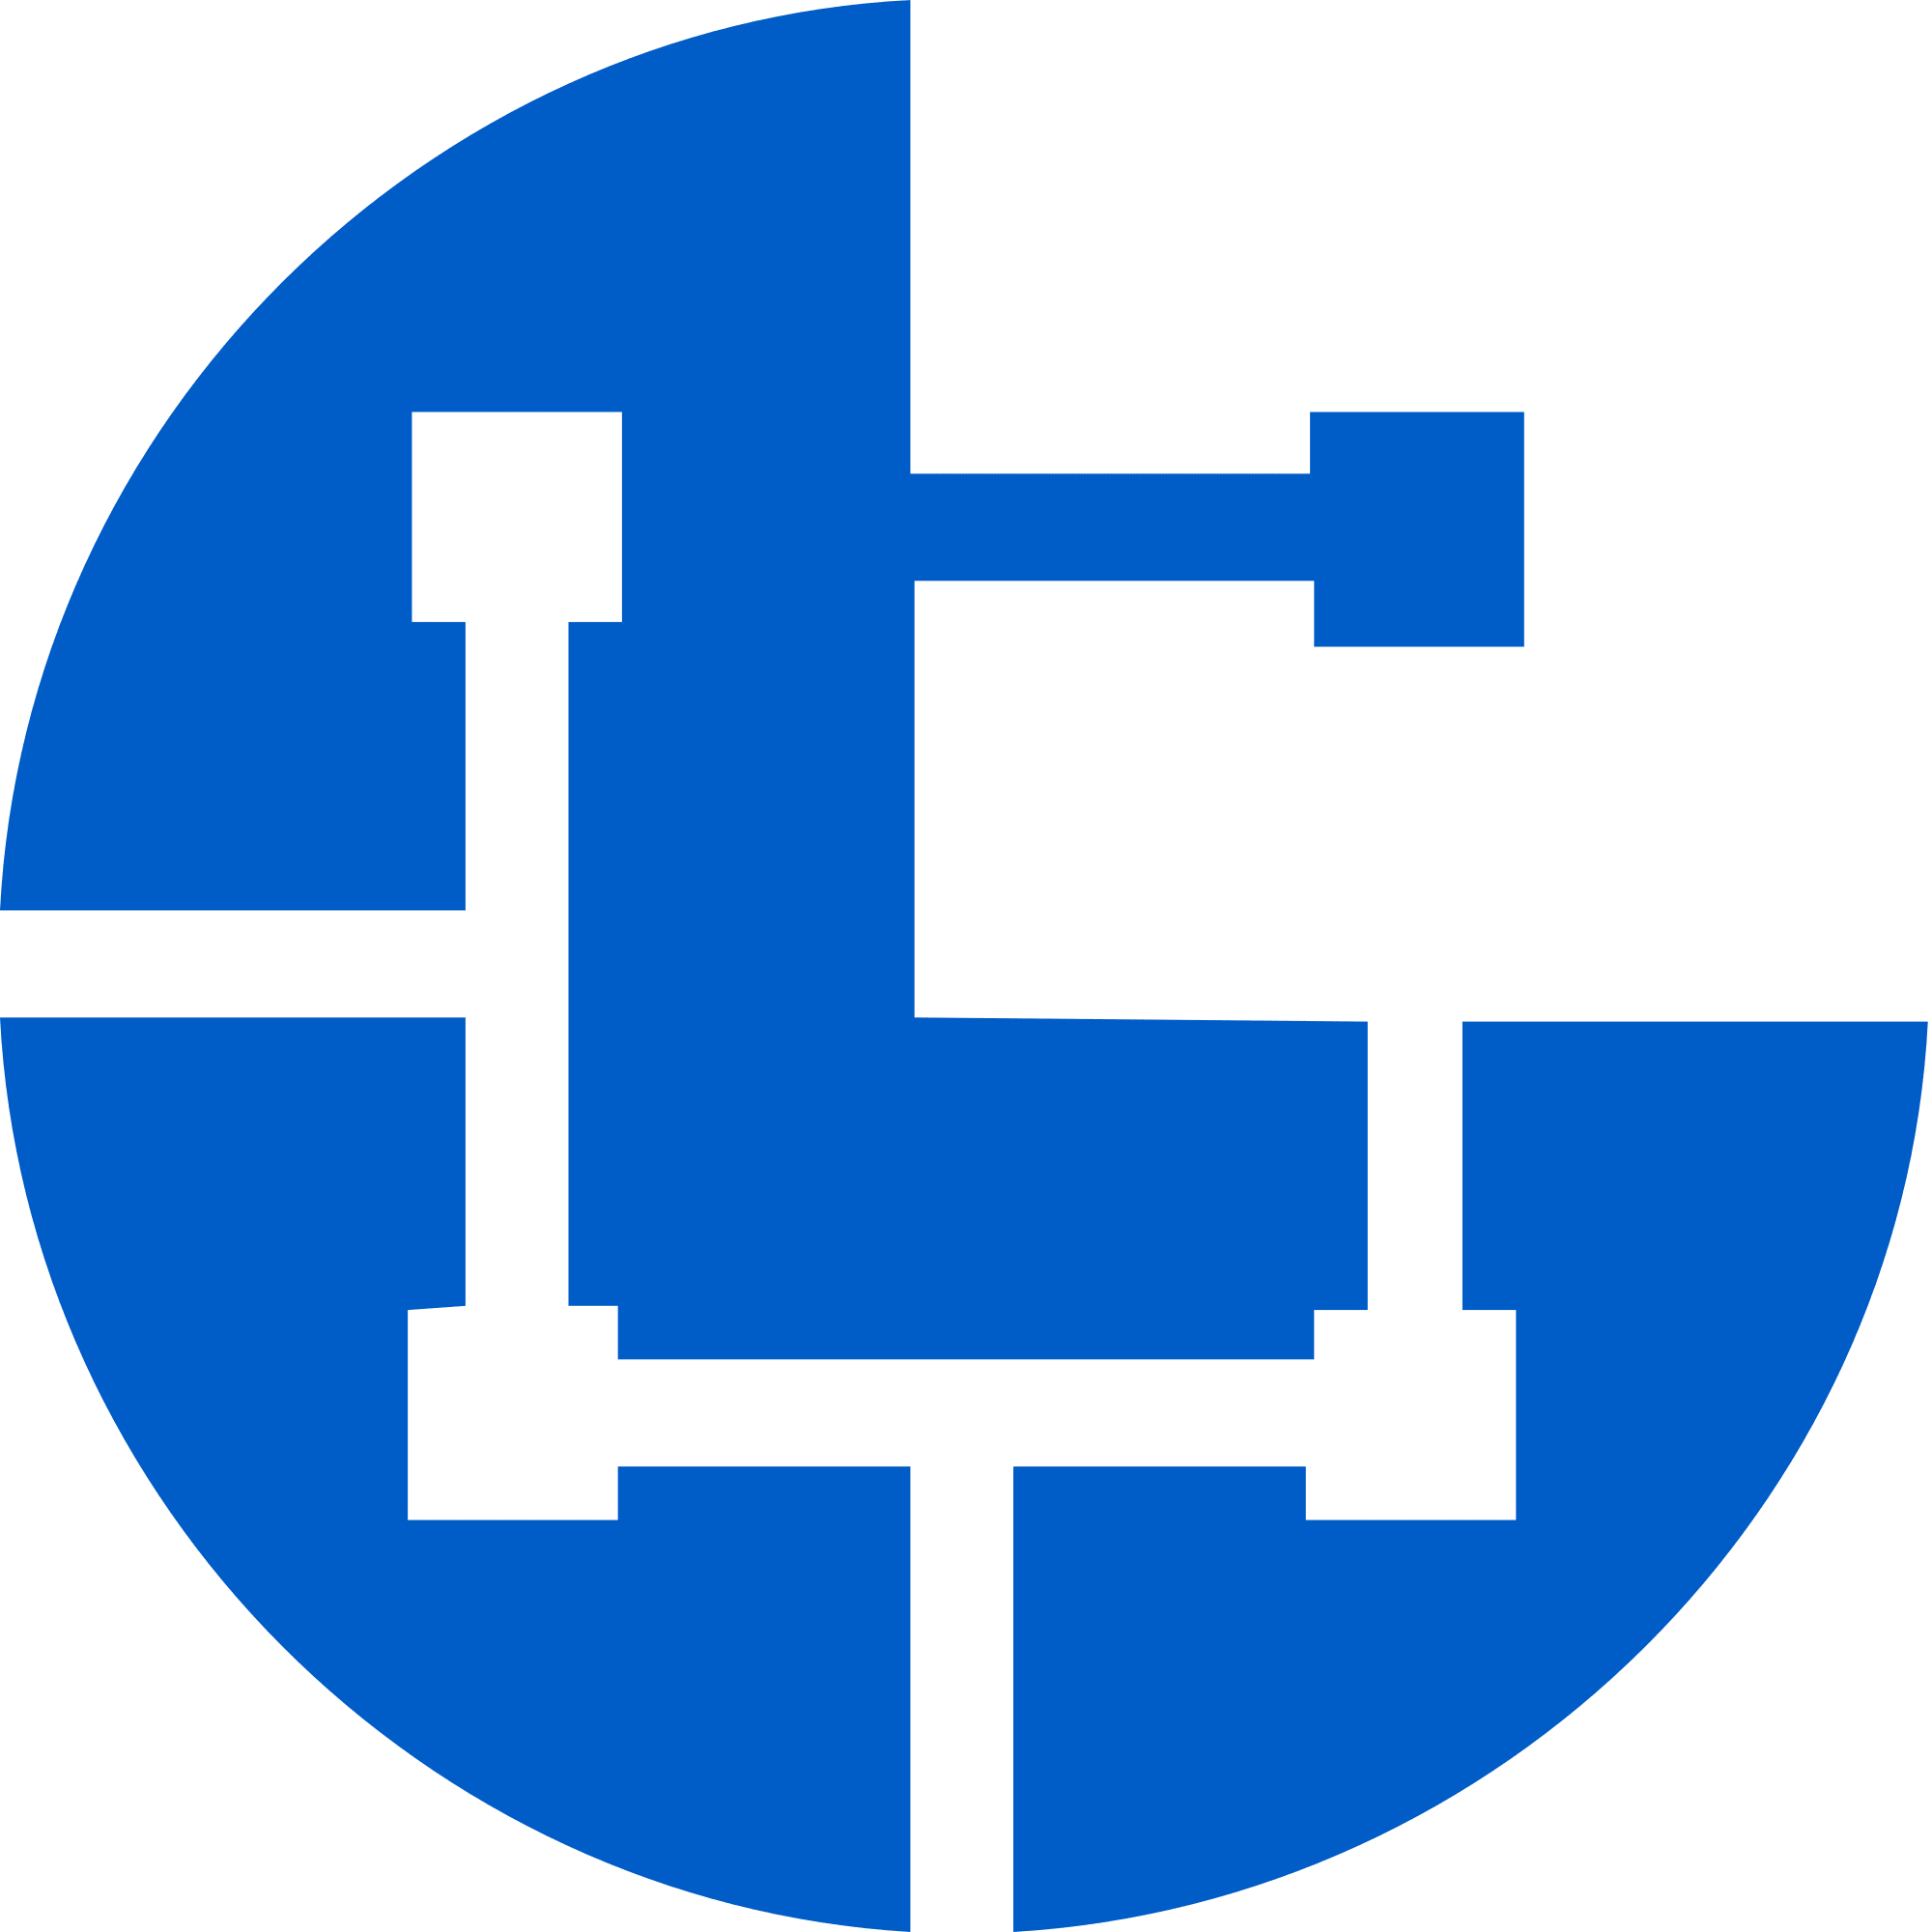 PARSIQ logo in png format